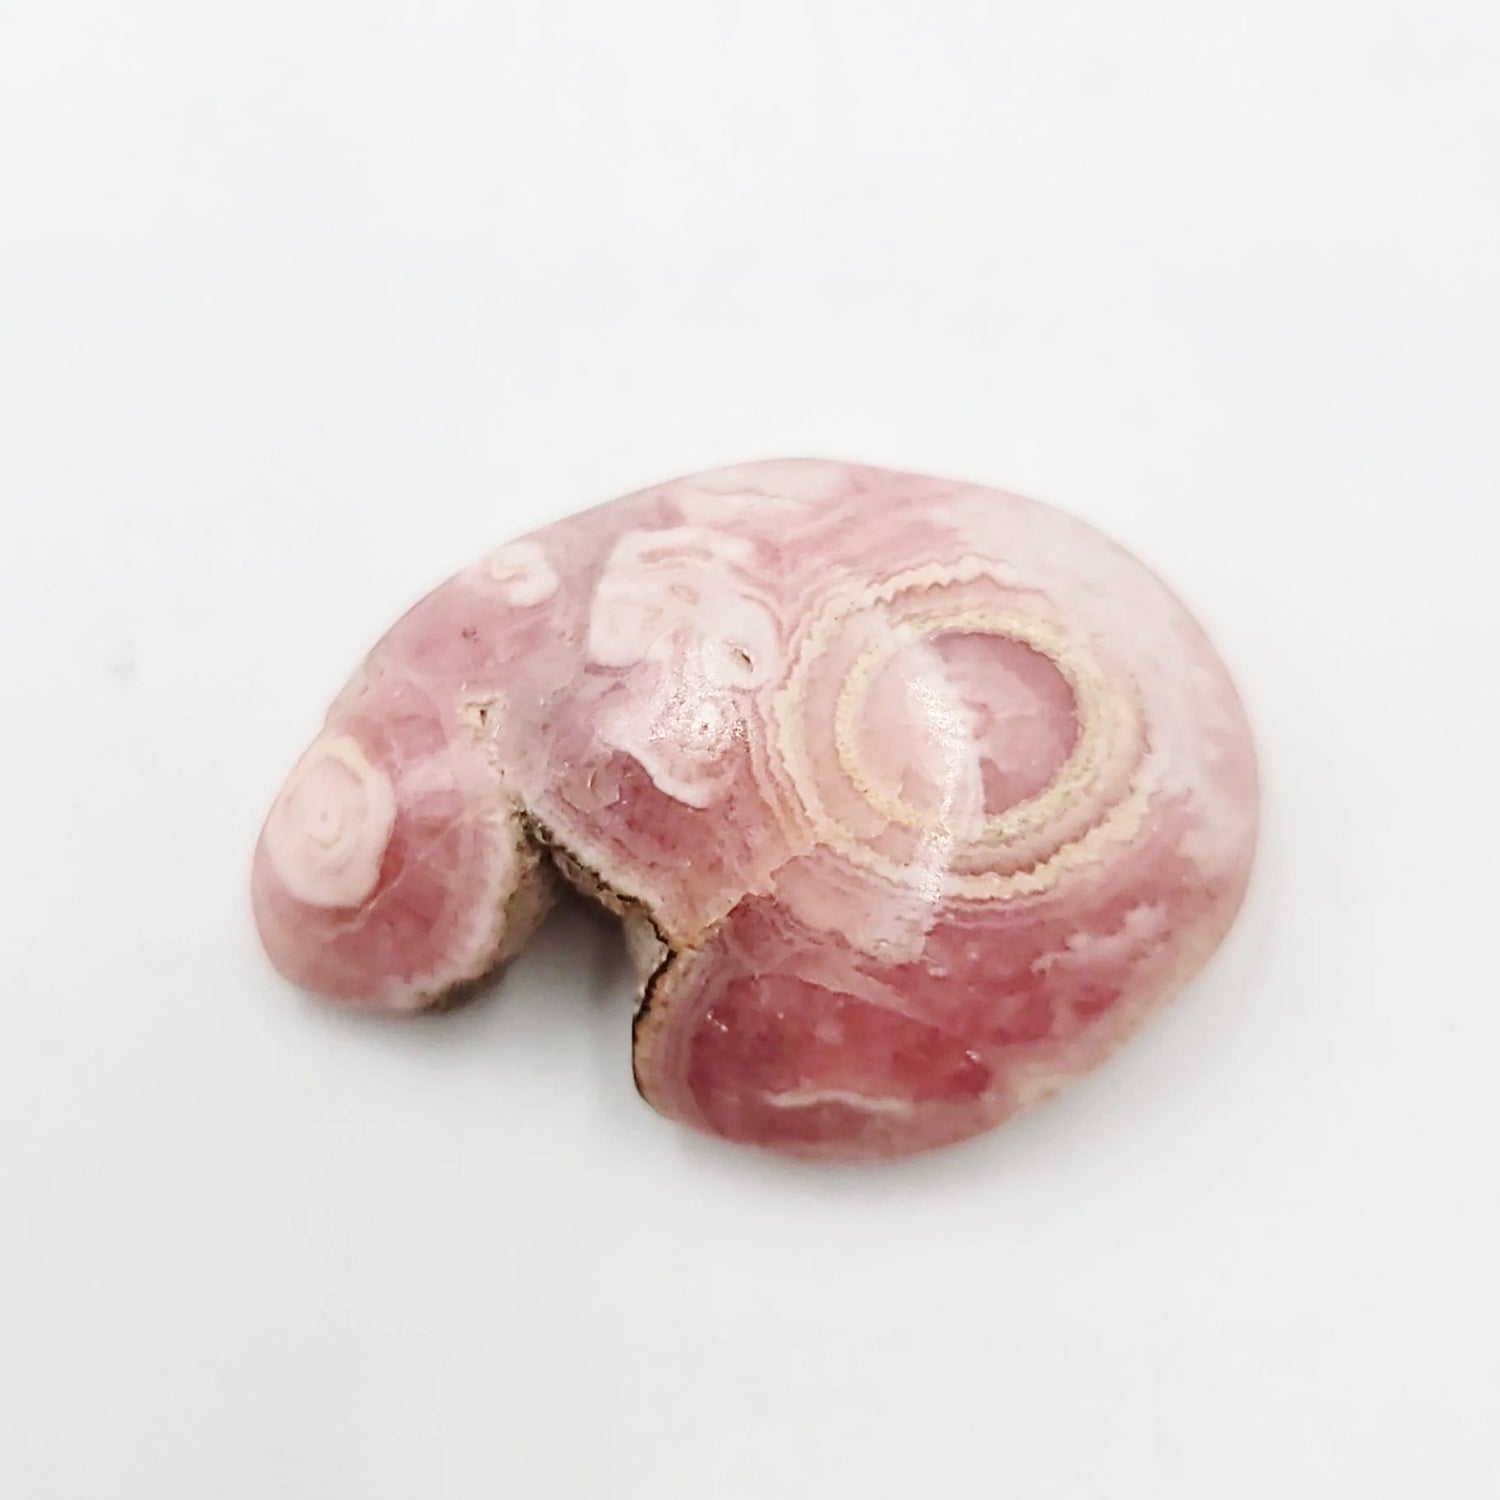 Rhodochrosite Cabochon Free Form "Kidney" Polished Cut Stone - Elevated Metaphysical